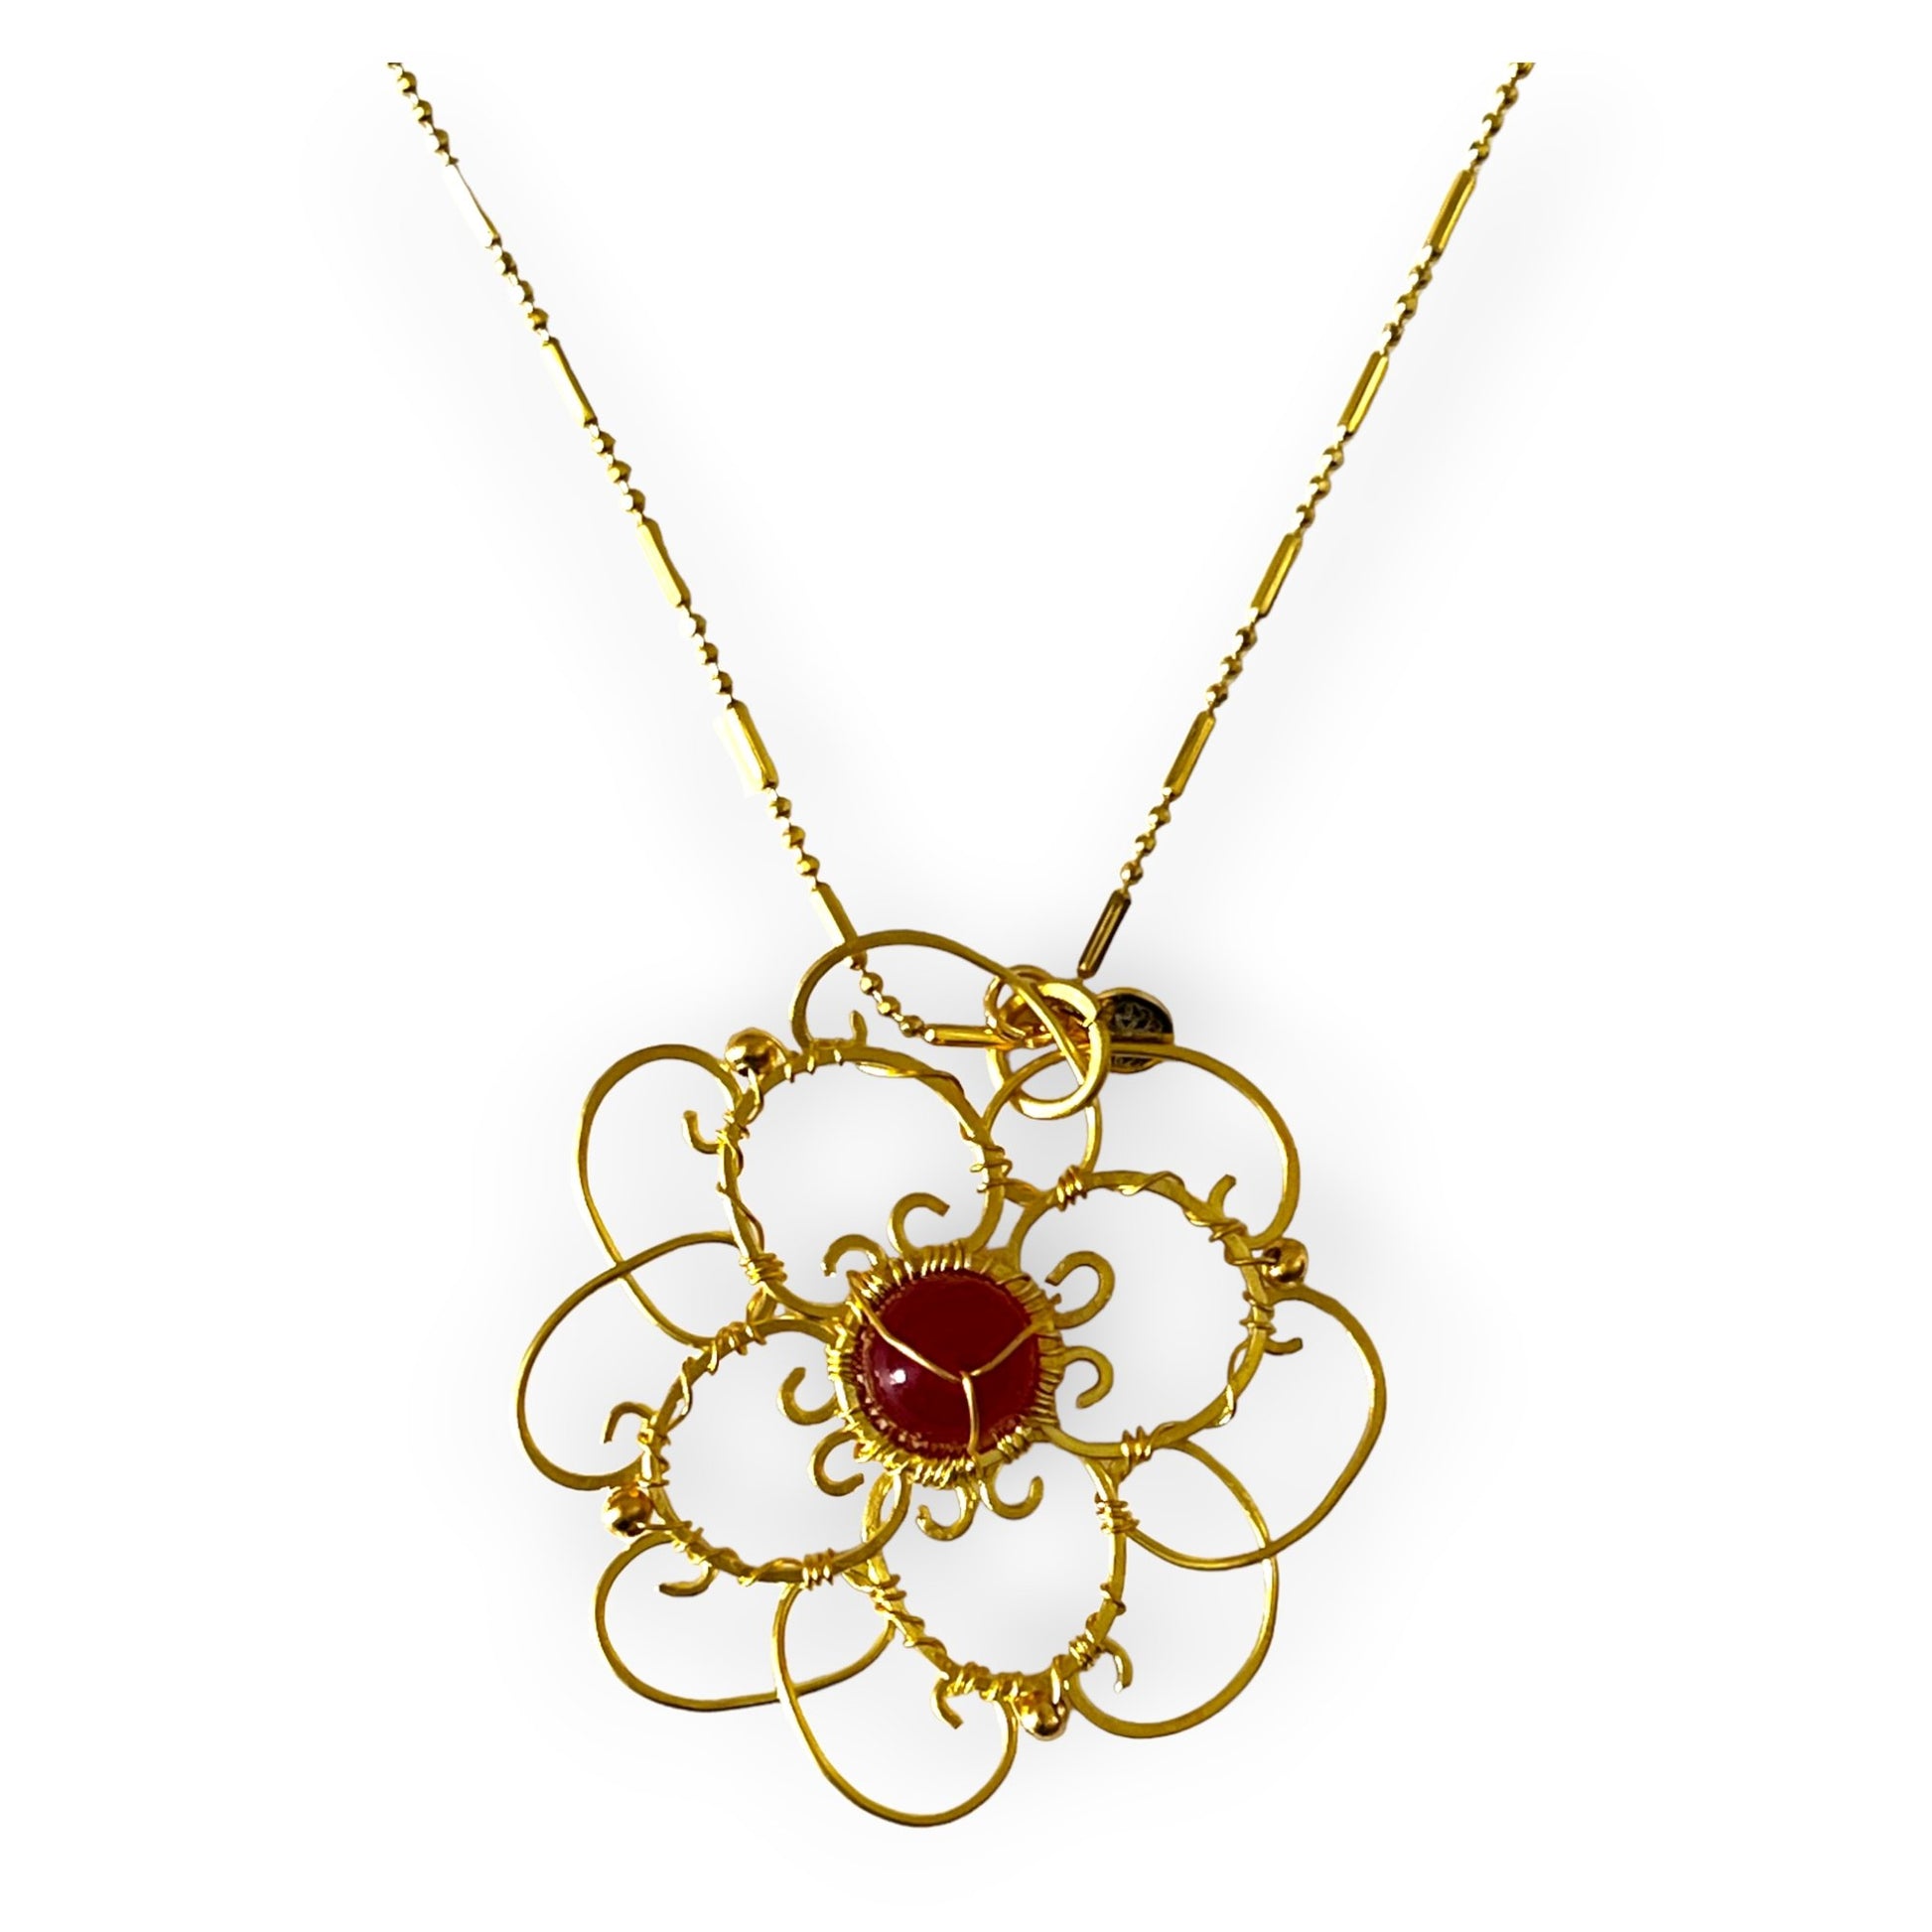 Mandala inspired gemstone pendant necklace - Sundara Joon